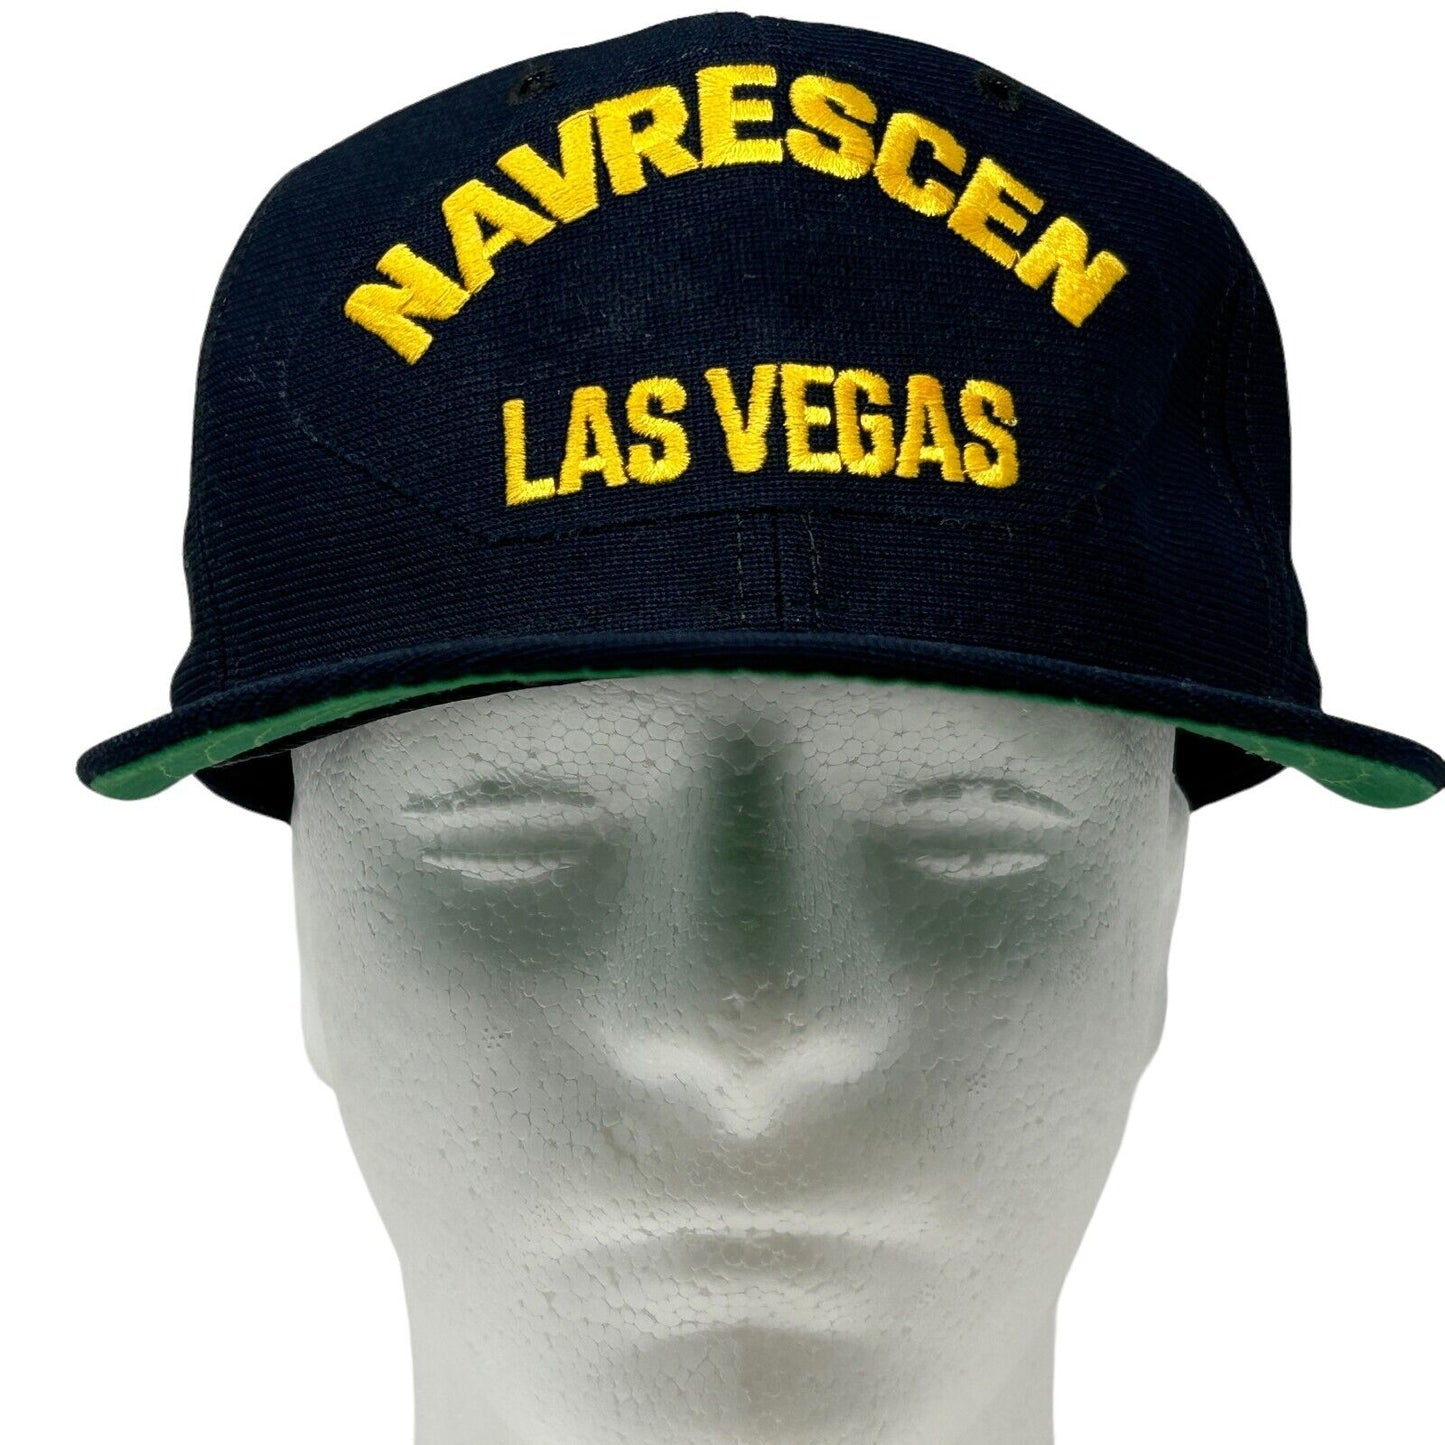 NAVRESCEN Las Vegas Naval Reserve Center Snapback Hat Vintage Navy New Era Cap